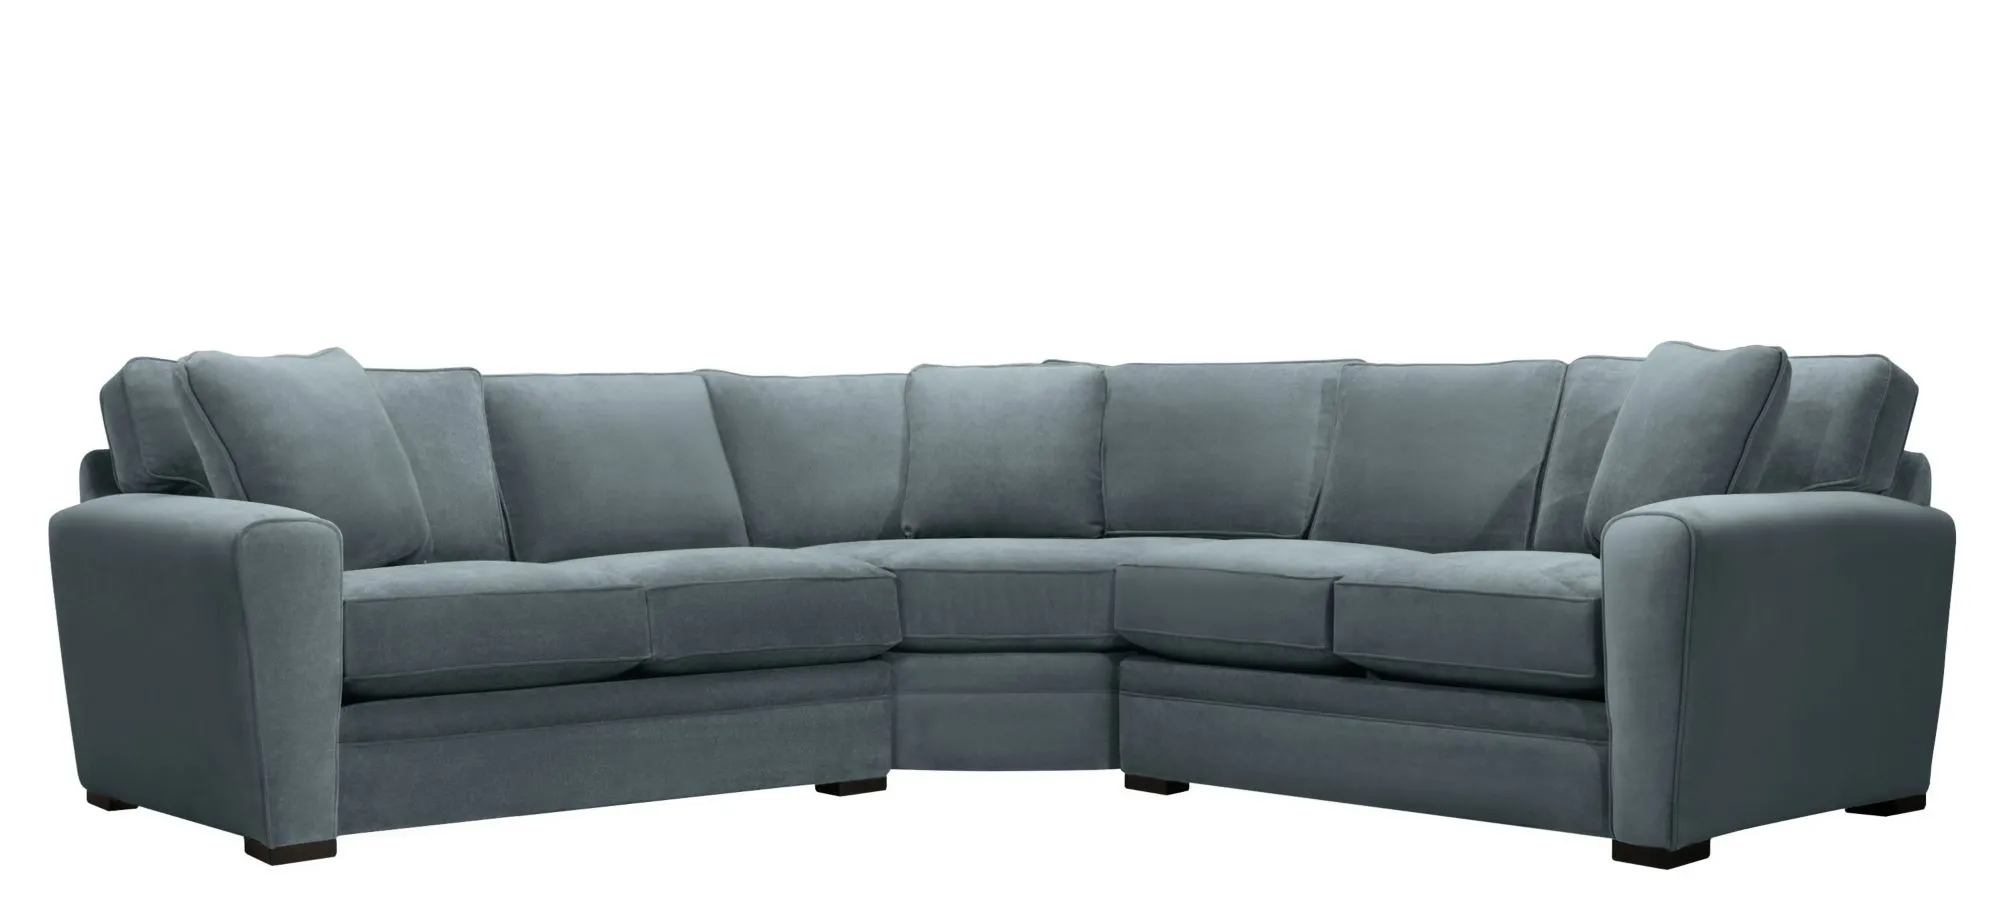 Artemis II 3-pc. Symmetrical Sectional Sofa in Gypsy Blue Goblin by Jonathan Louis